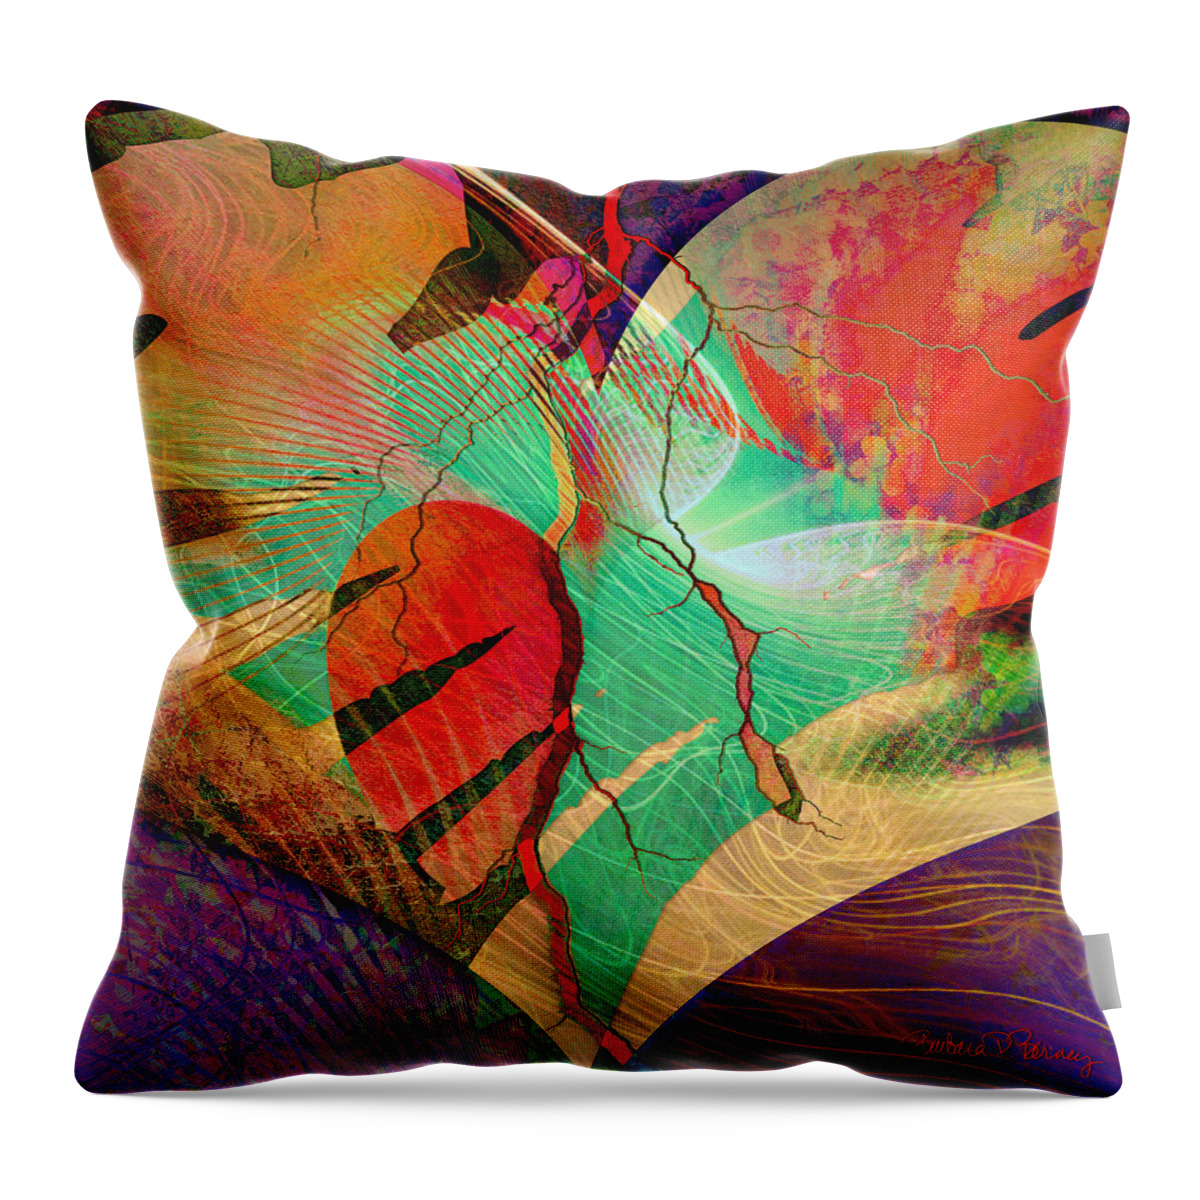 Heart Throw Pillow featuring the digital art Infatuation by Barbara Berney